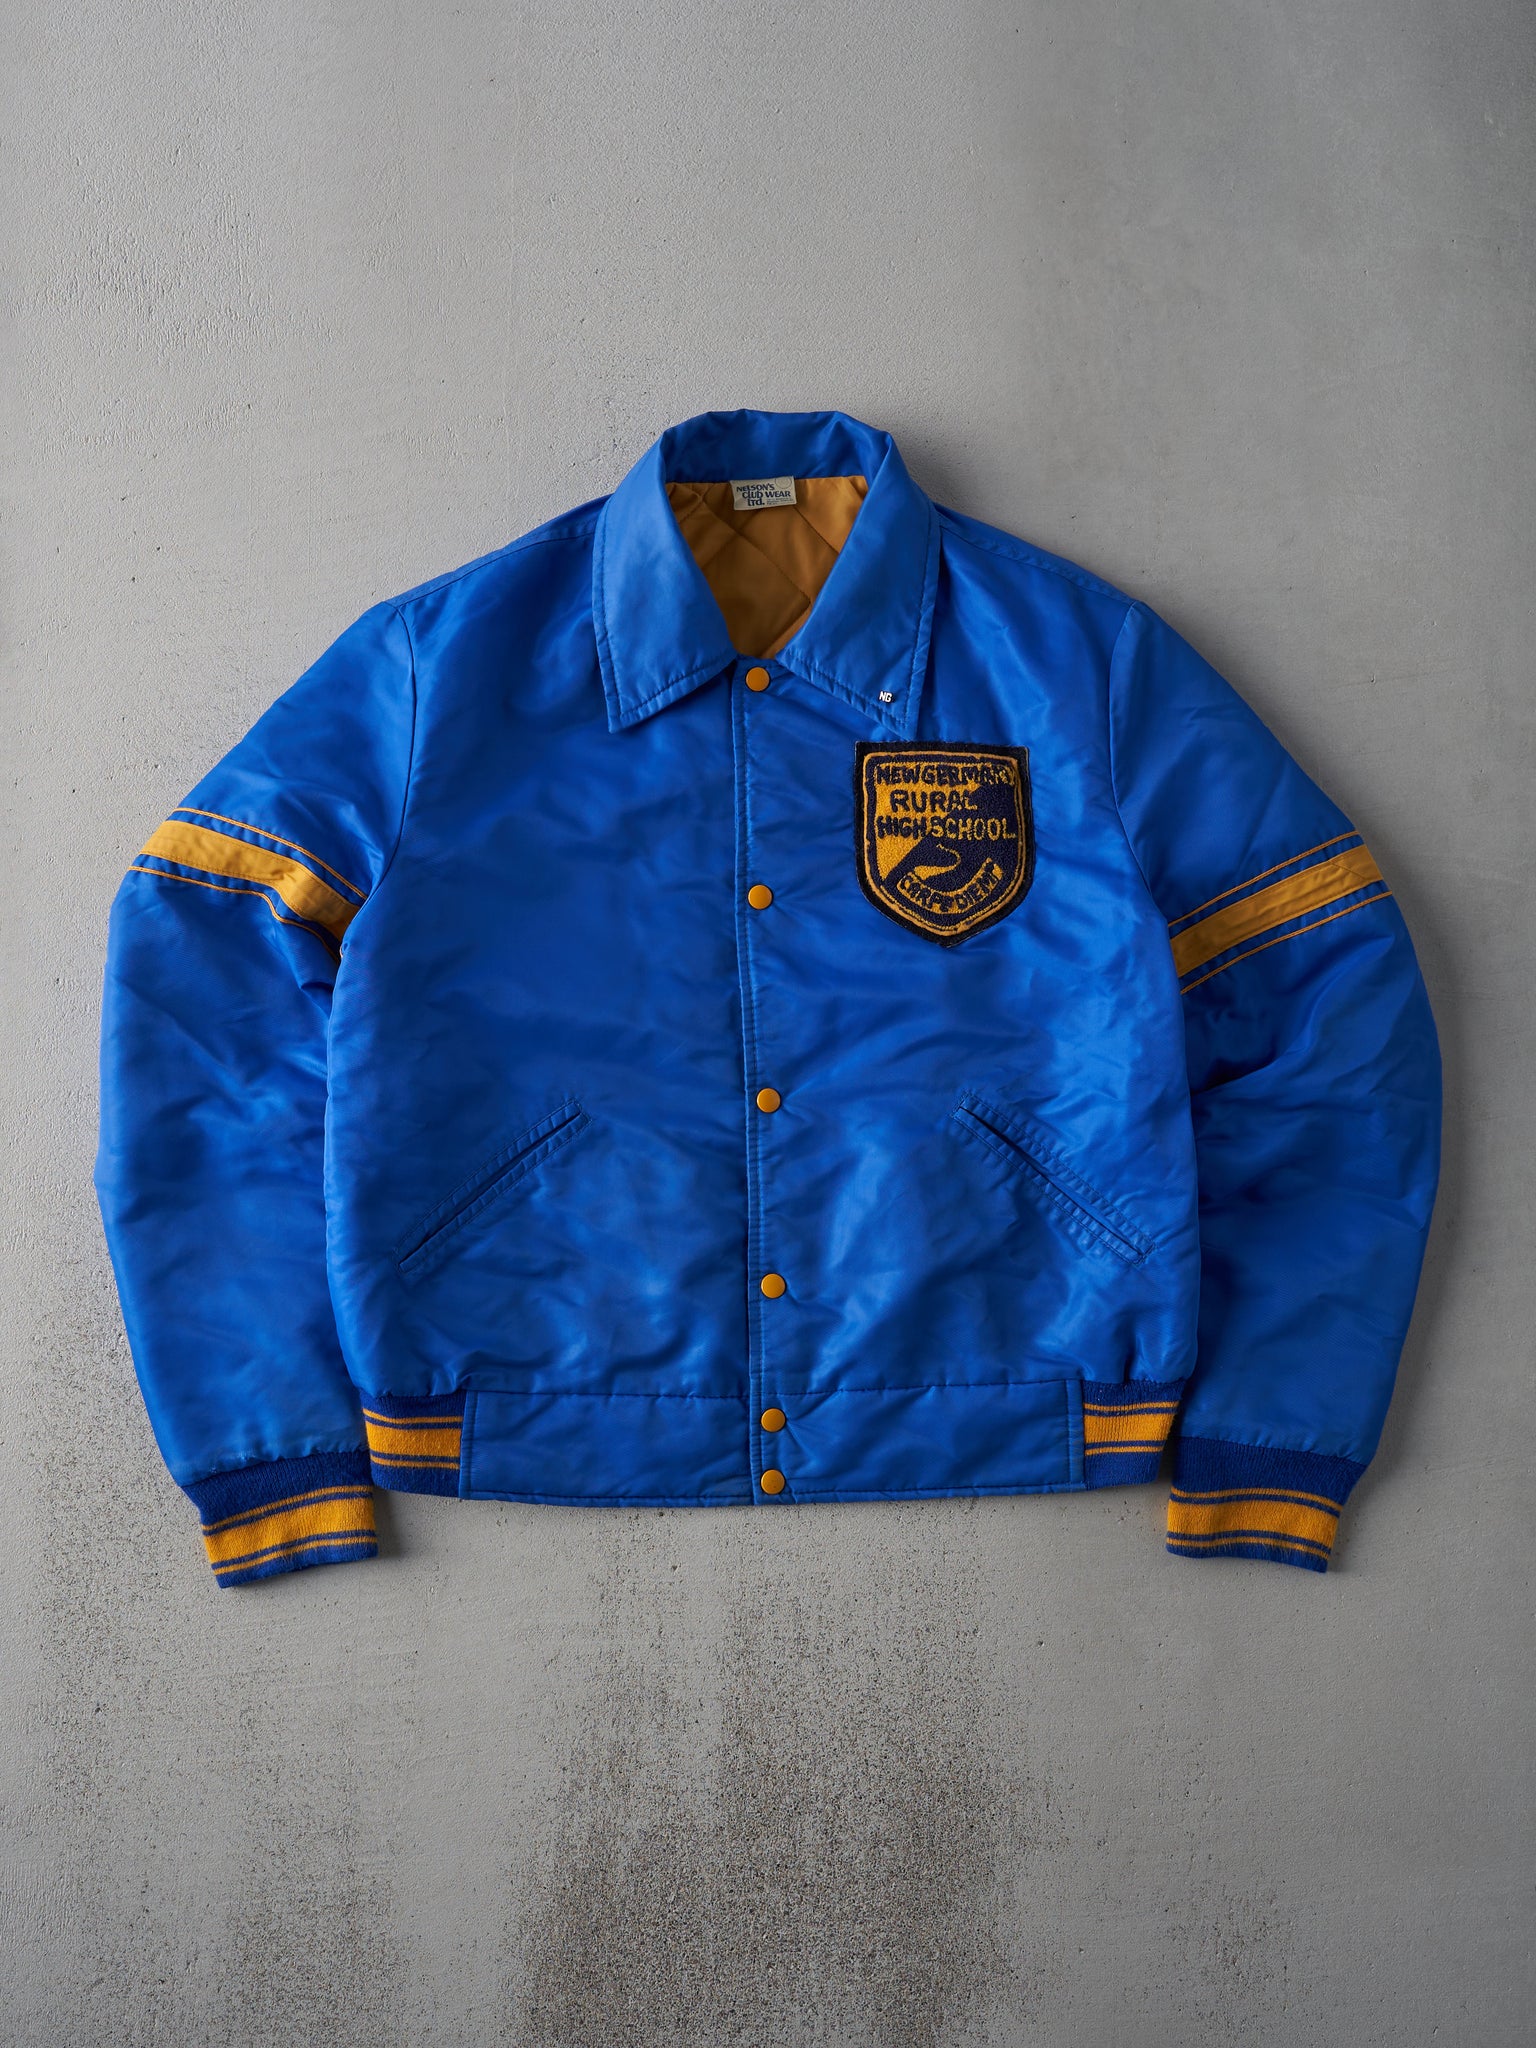 Vintage 70s Blue and Yellow Highschool Satin Varsity Bomber Jacket (M)